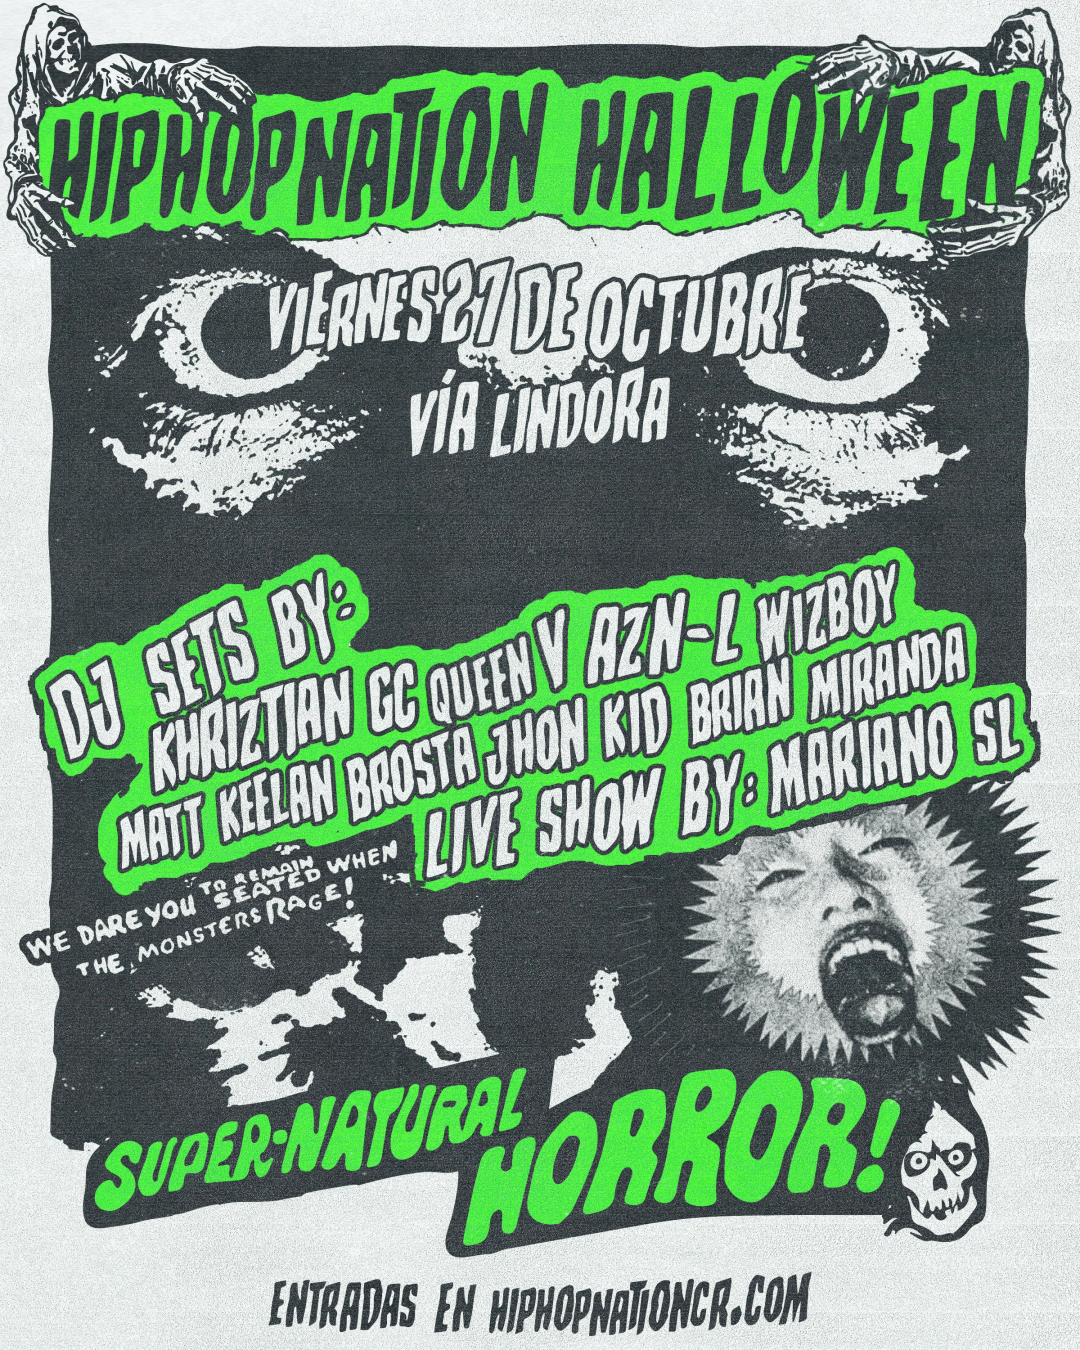 Hip Hop Nation Halloween